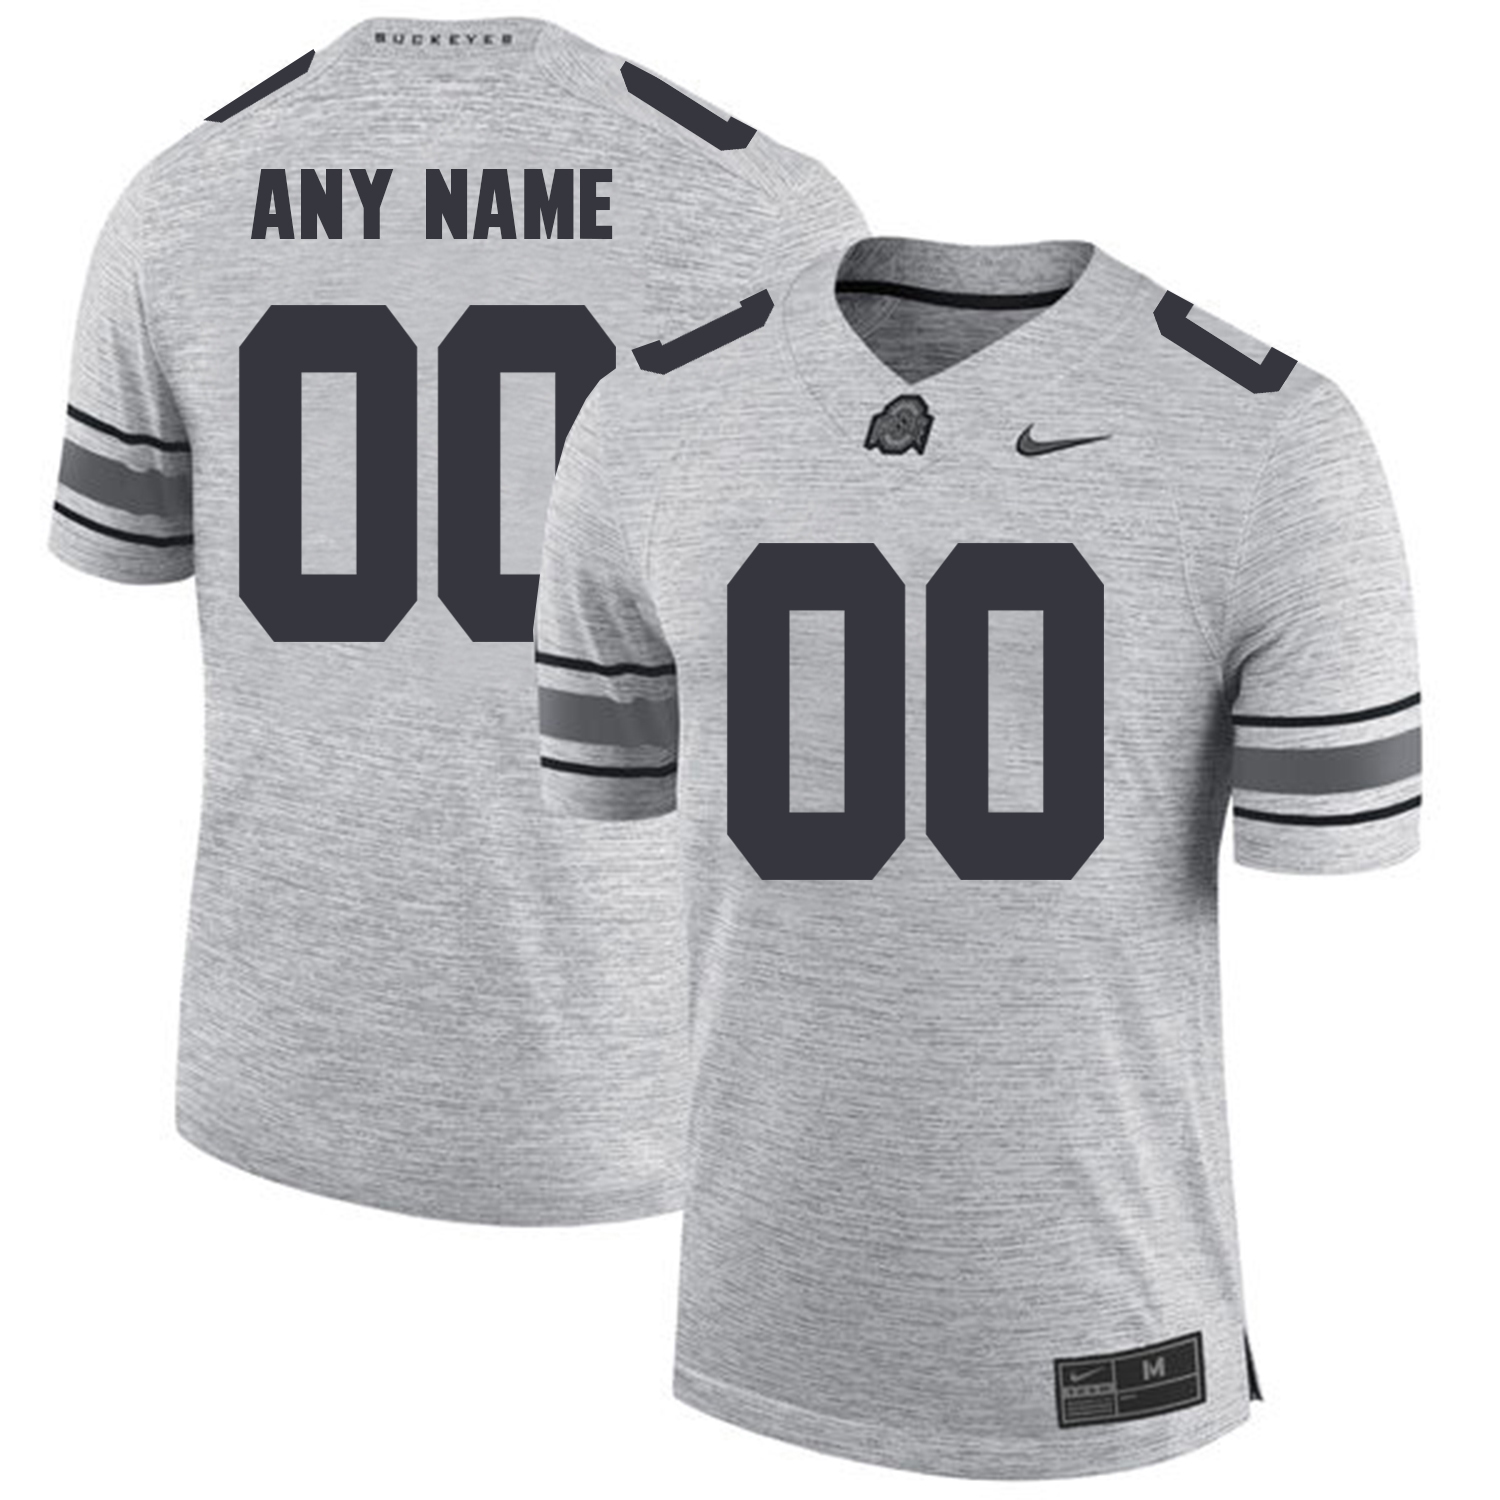 Men's Ohio State Buckeyes Custom College Football Nike Limited Jersey - Heather Gridiron Gray II